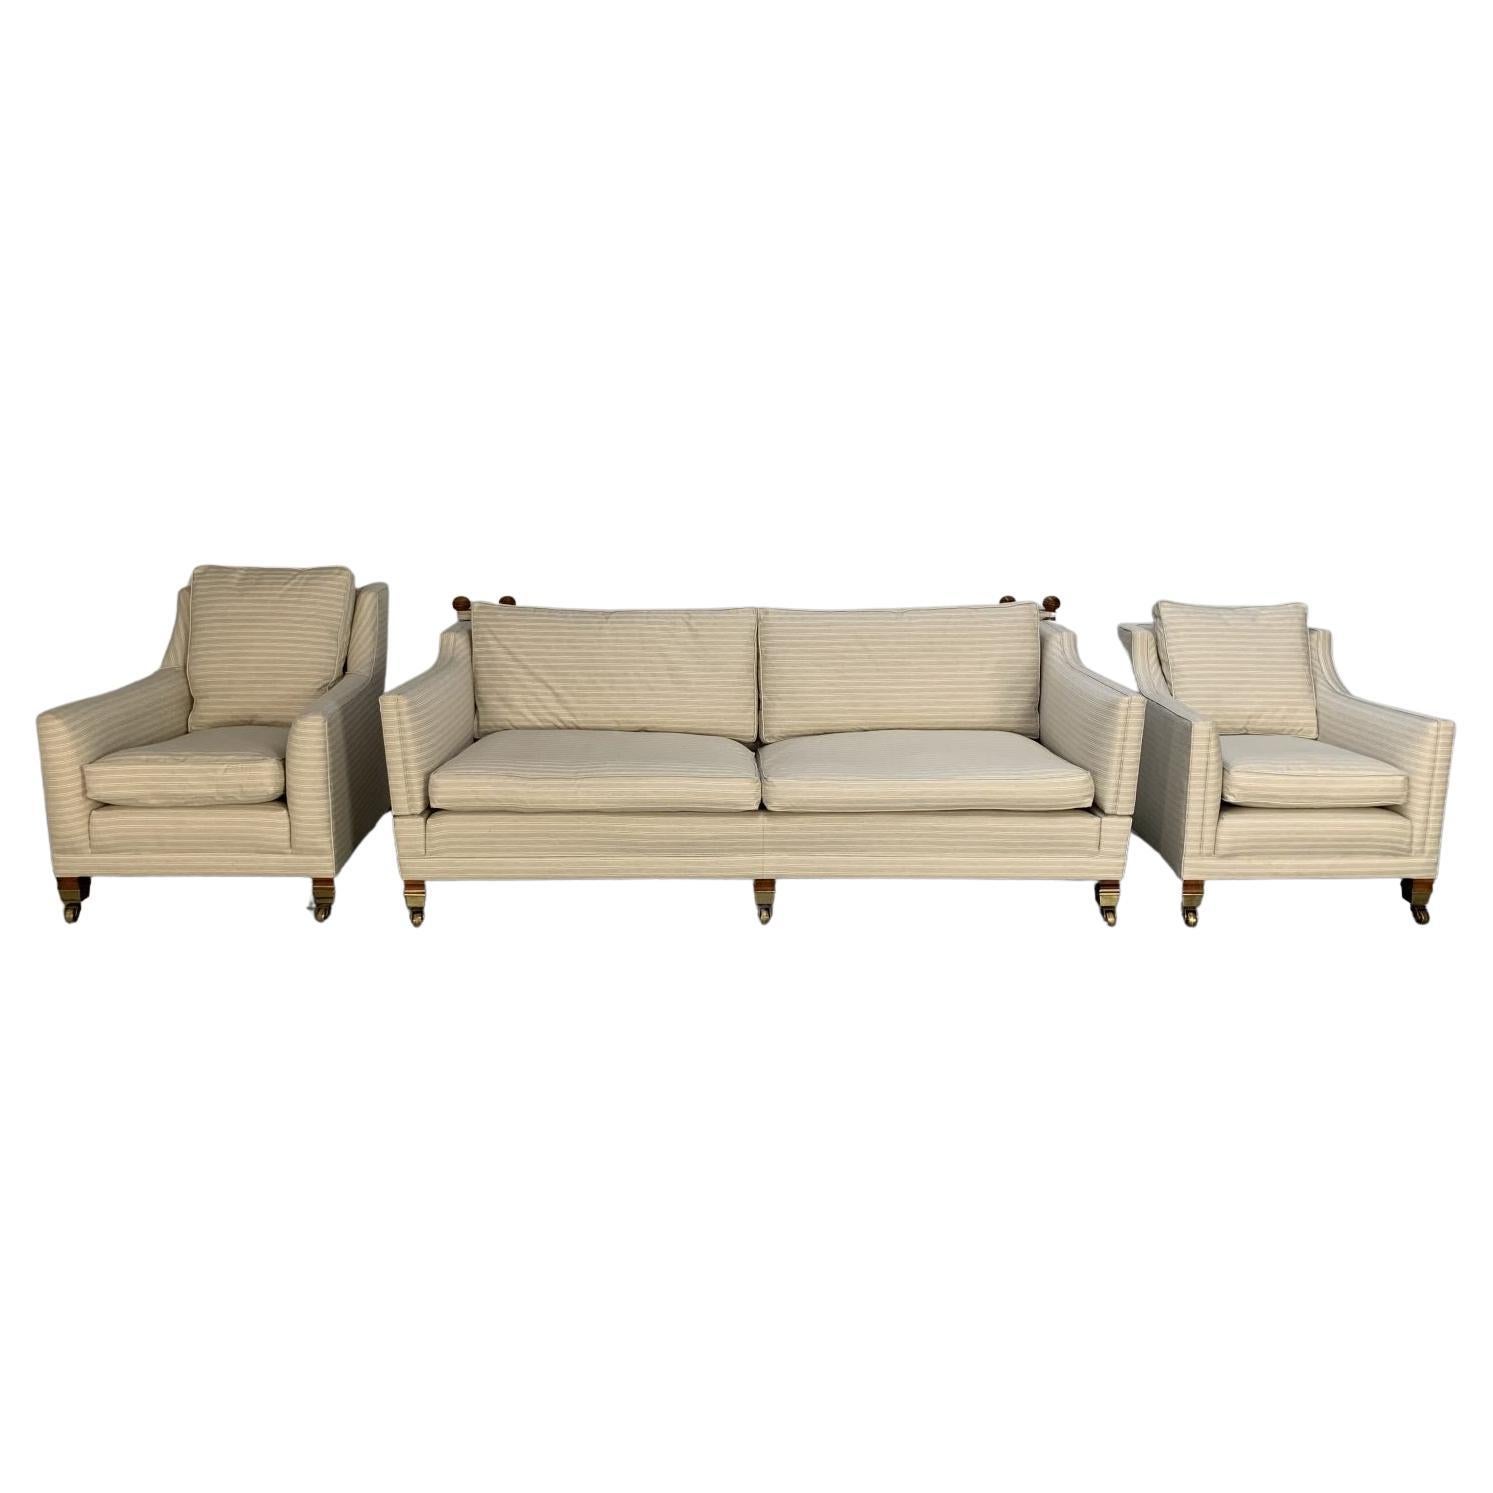 Duresta “Trafalgar” Sofa & 2 Armchair Suite – In Navy Pinstripe Linen